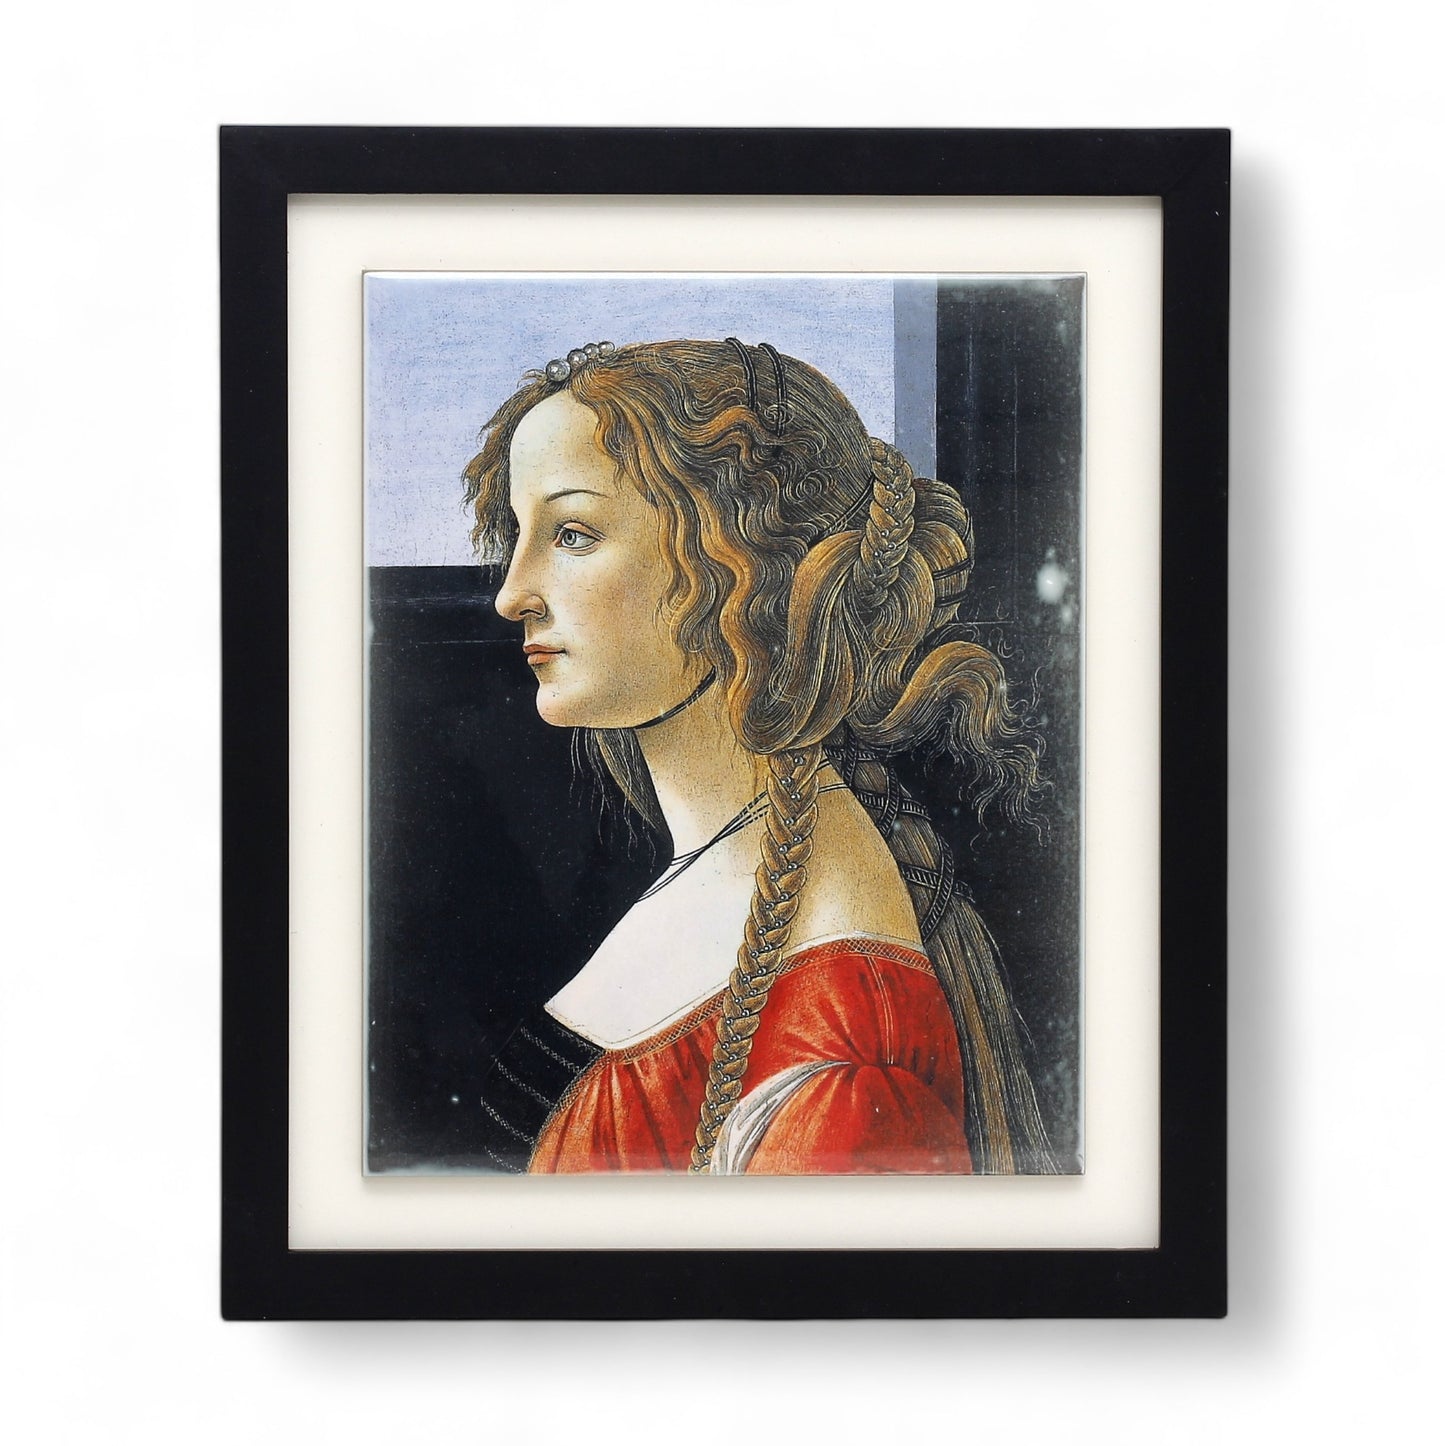 AFFRESCO: Ceramic Tile - Opera "Lady Simonetta Vespucci" portrait by Sandro Botticelli (8x10) - Black Frame